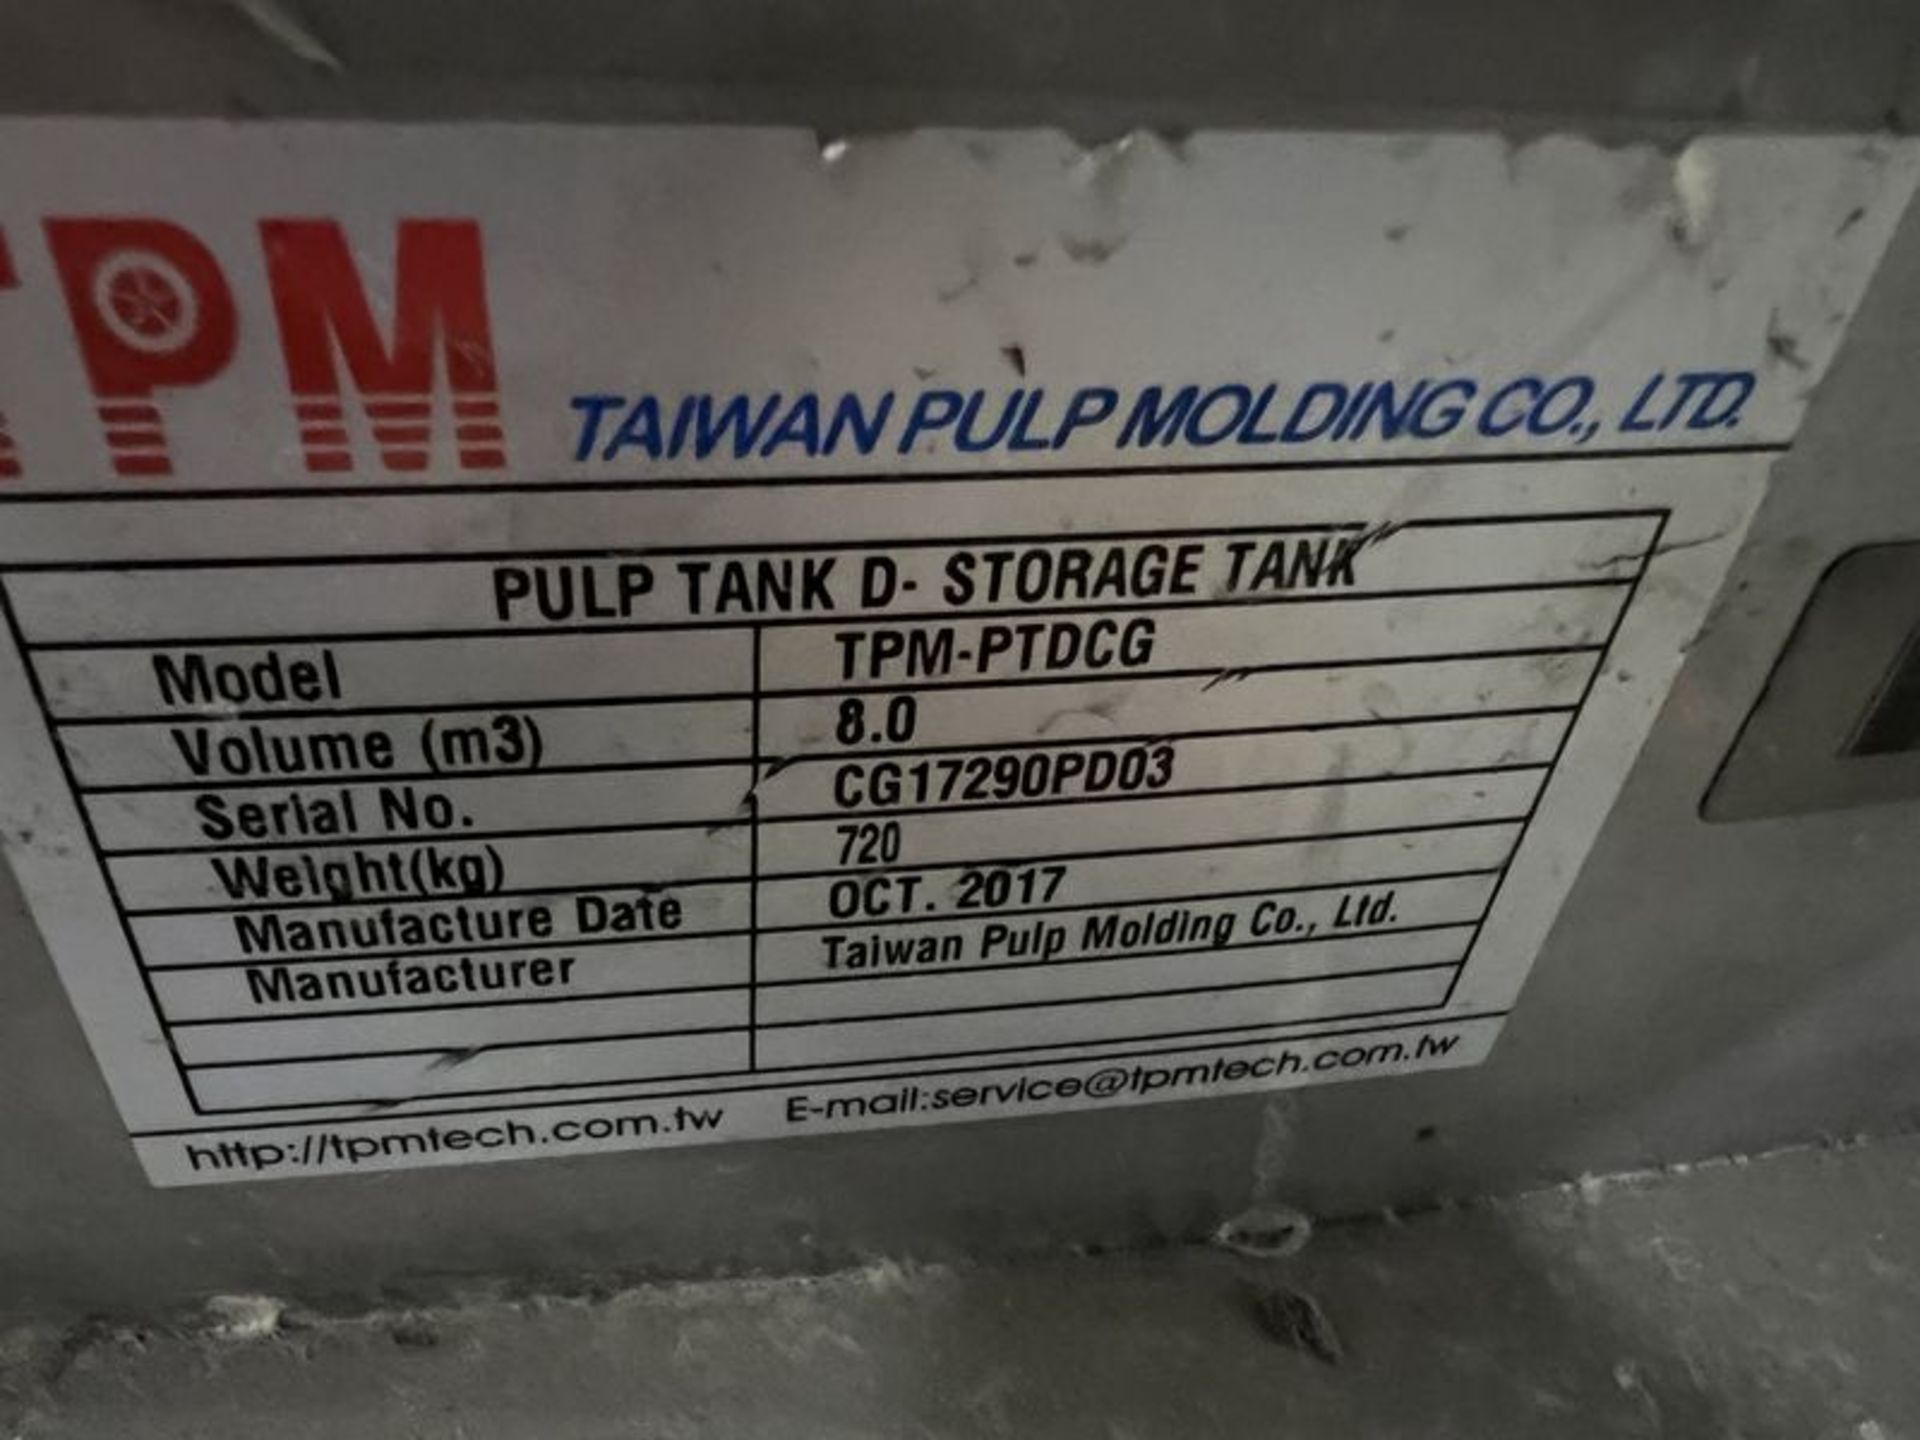 Taiwan Pulp Molding Co. Tank - Image 6 of 6